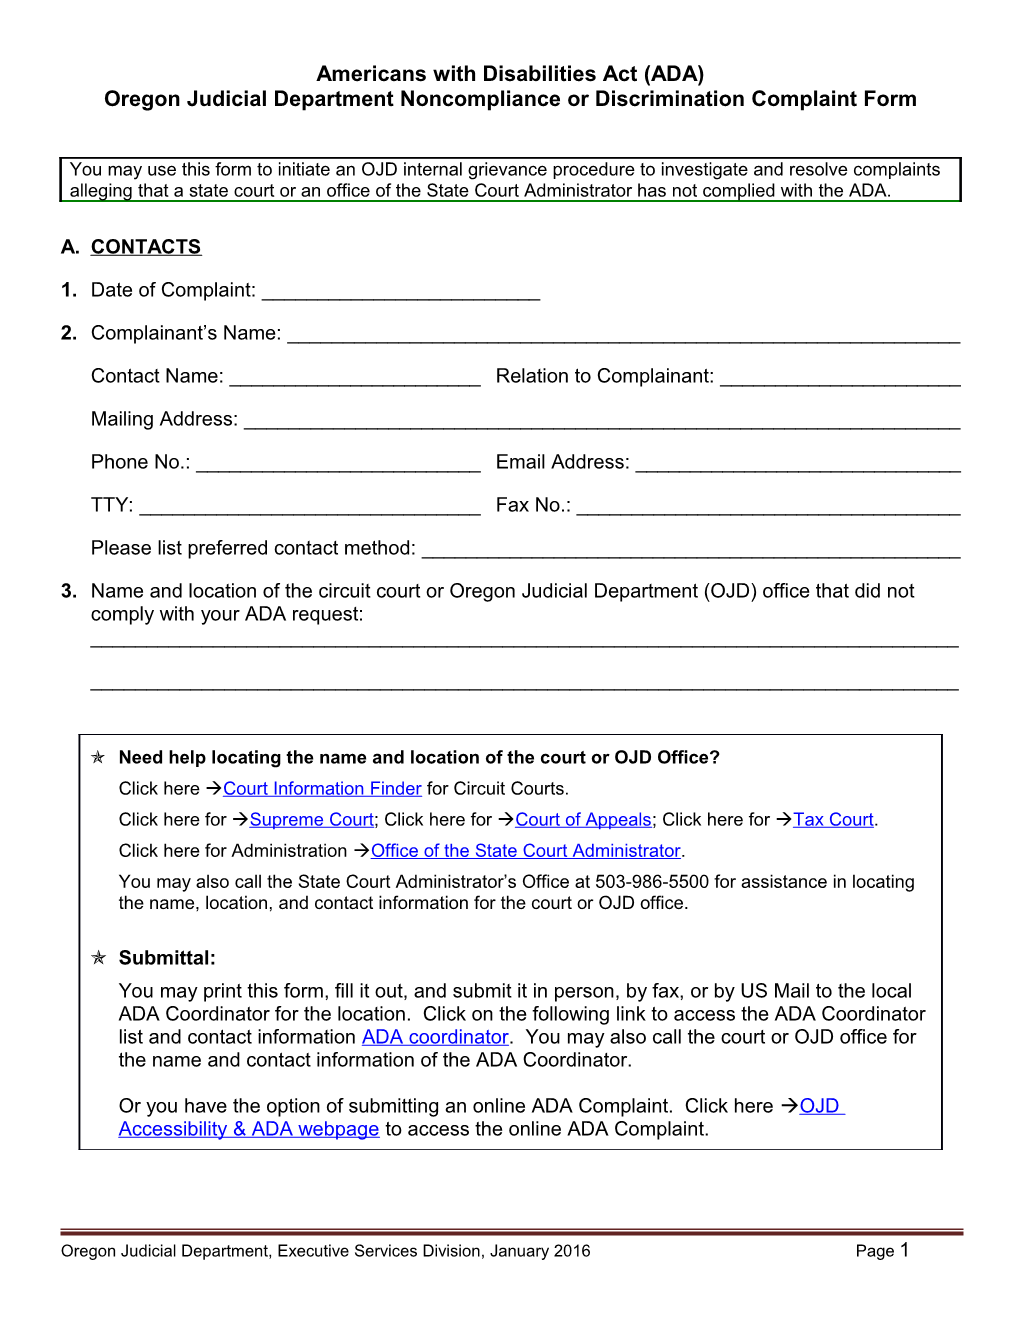 ADA Complaint Form